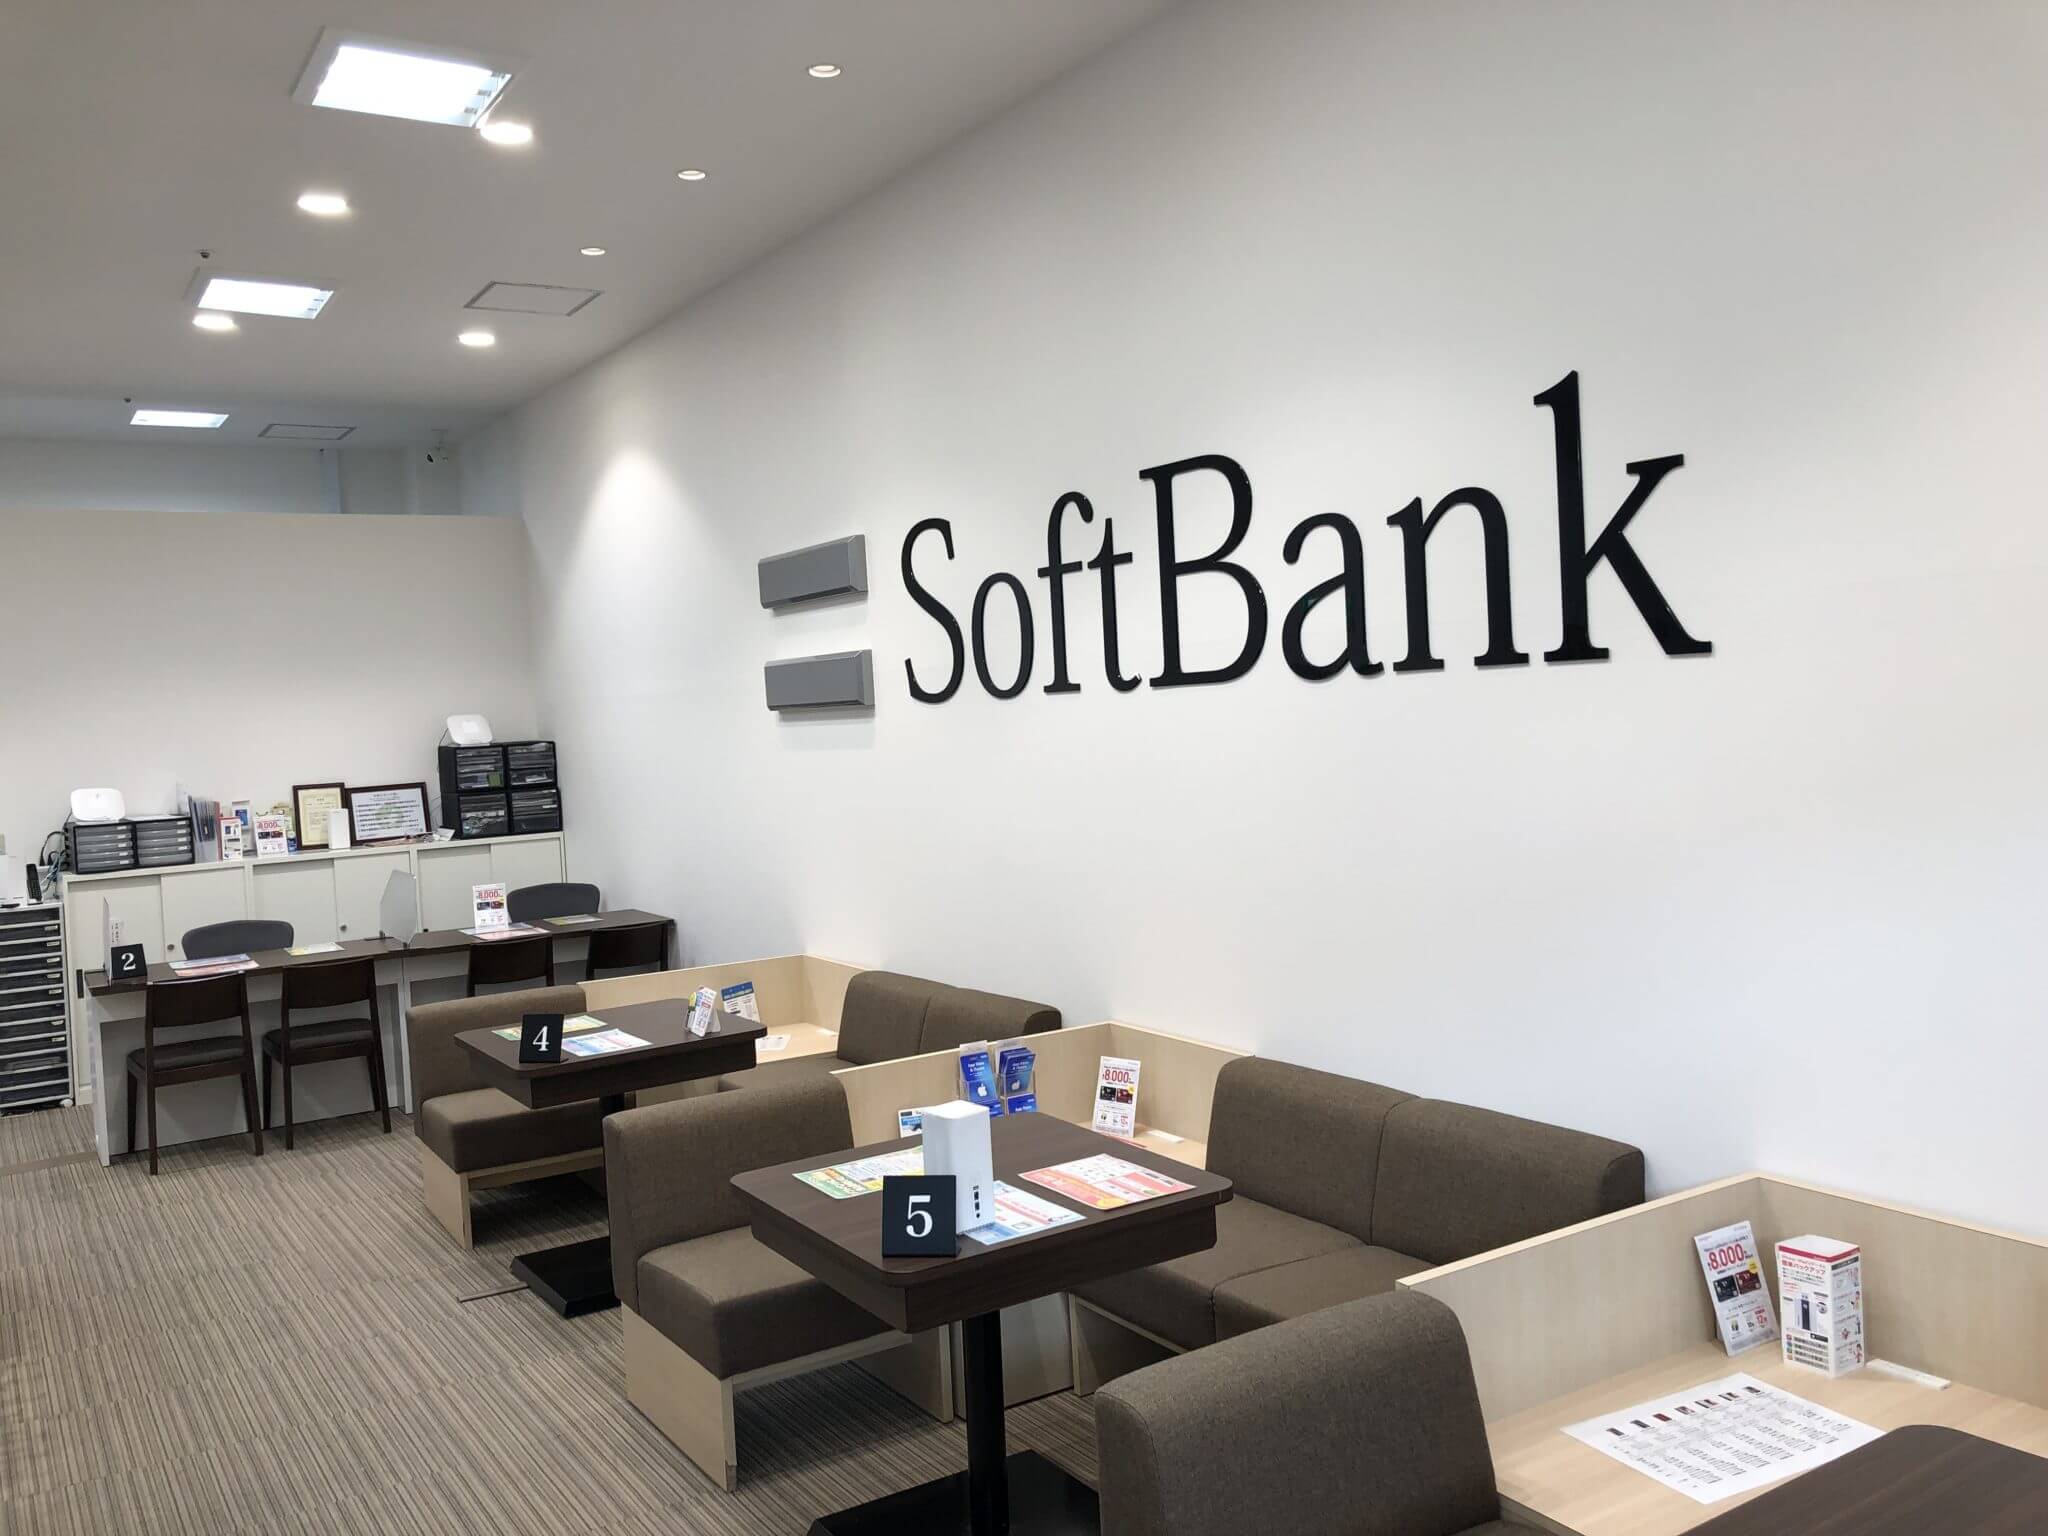 Softbank イオンモール大和郡山 アスカ株式会社 携帯販売代理店 東京を拠点に全国でソフトバンク Yモバイルを運営